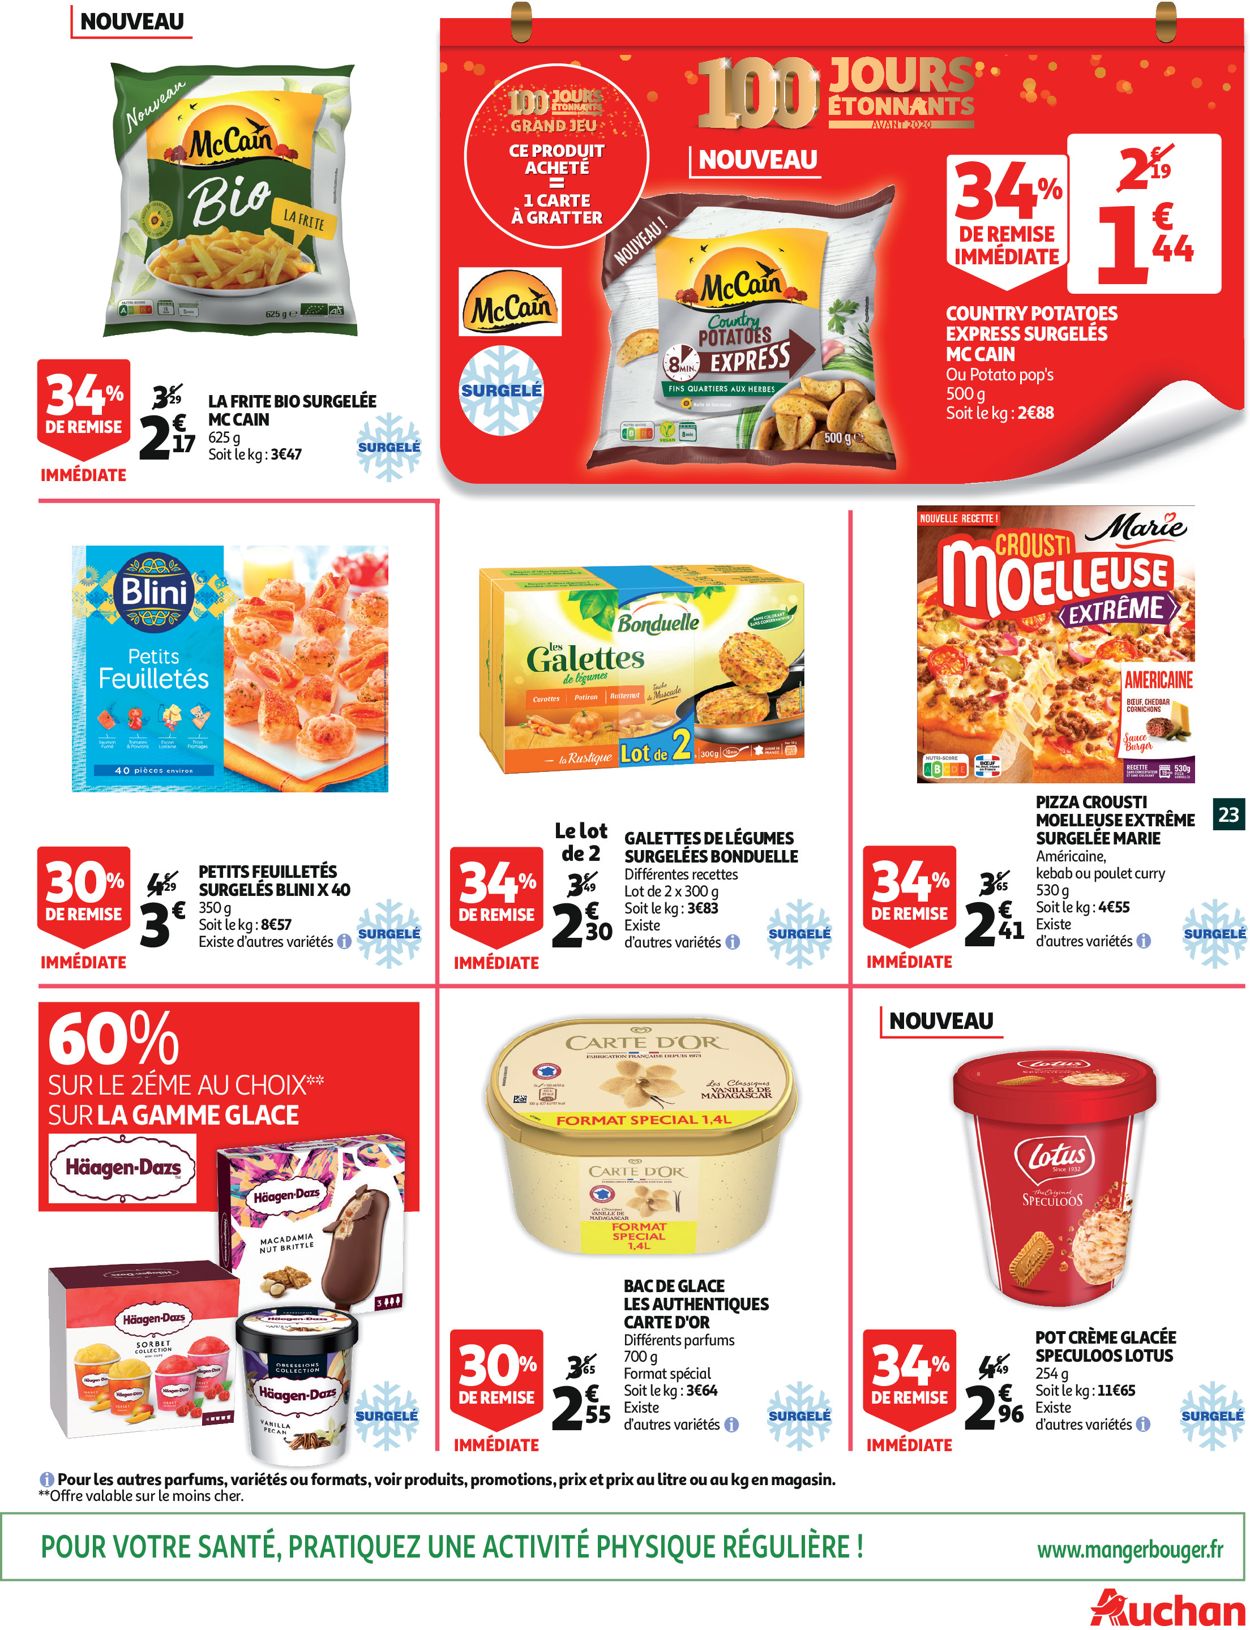 Auchan Catalogue - 06.11-12.11.2019 (Page 23)